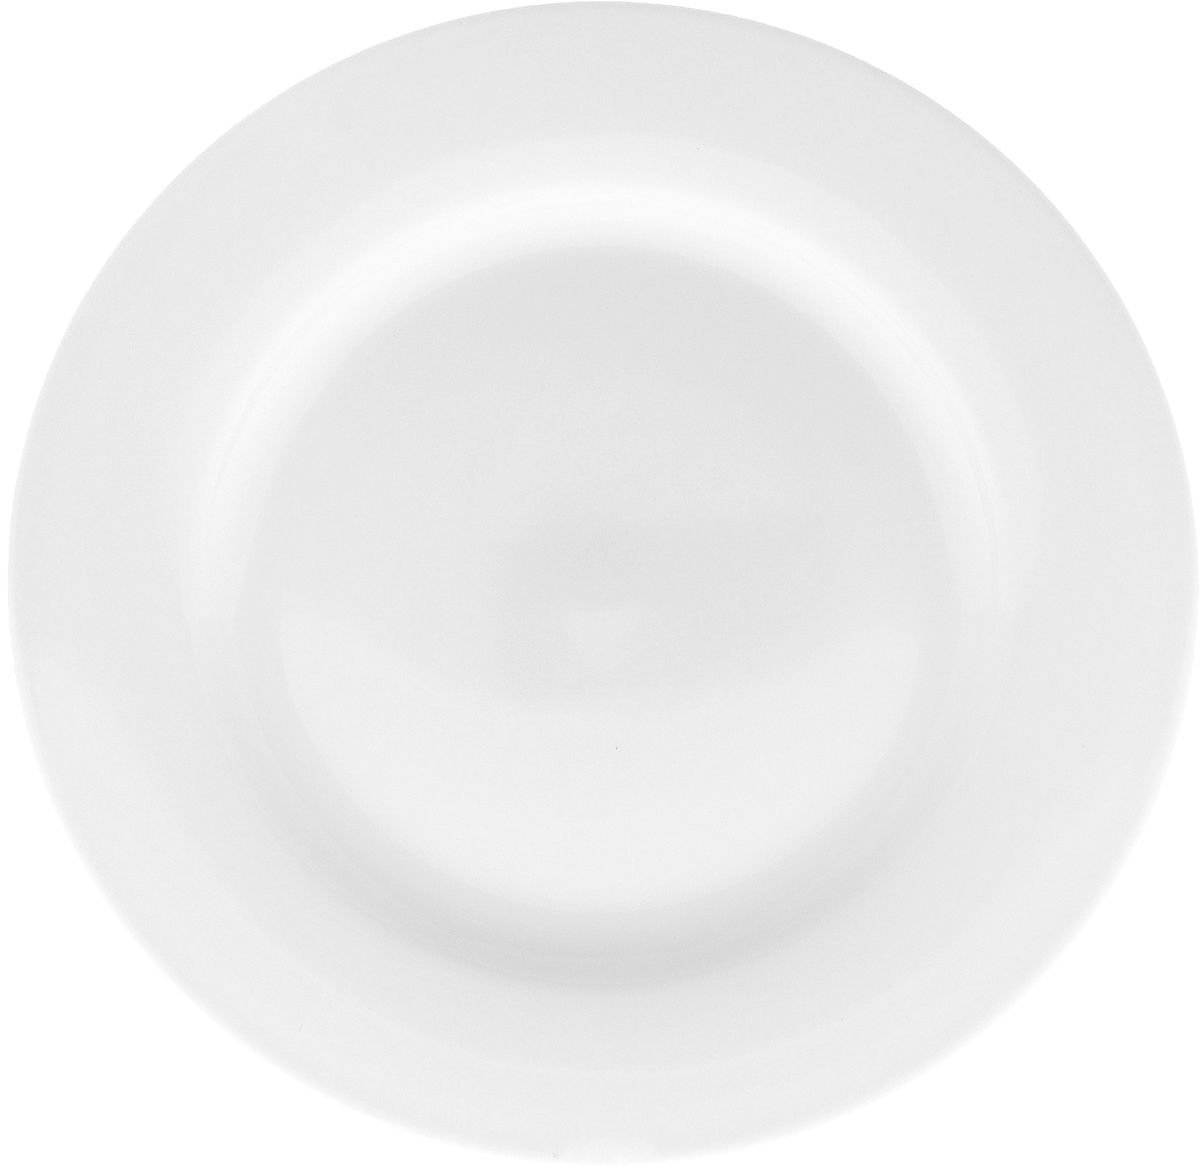 Professional Rolled Rim White Dessert Plate 8" inch | 20 Cm-8